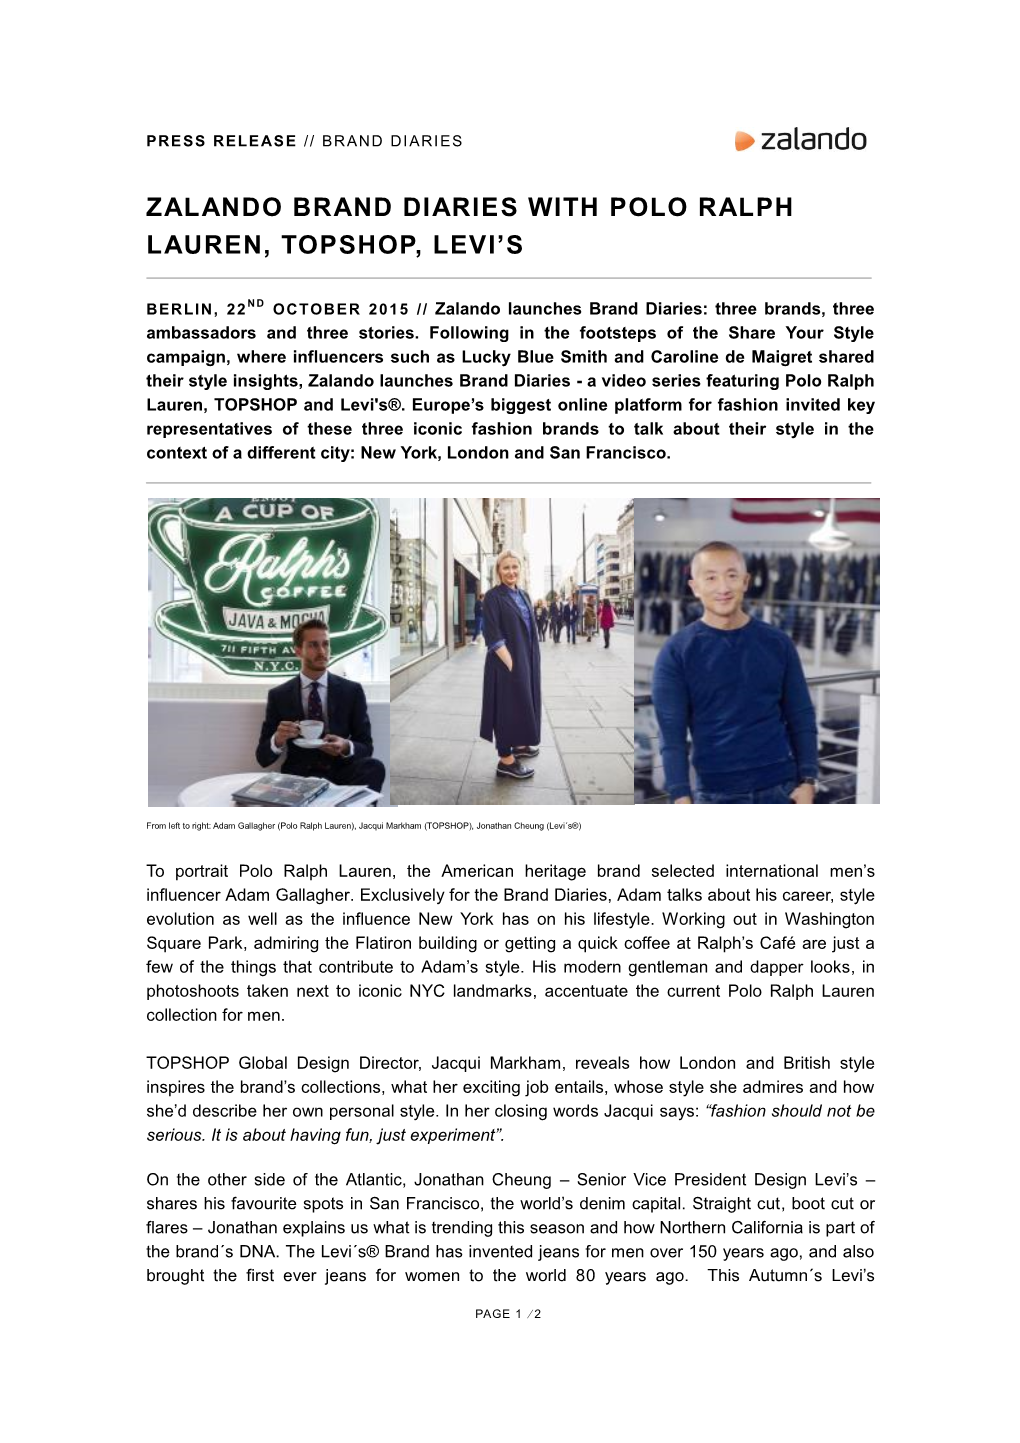 Zalando Brand Diaries with Polo Ralph Lauren, Topshop, Levi's